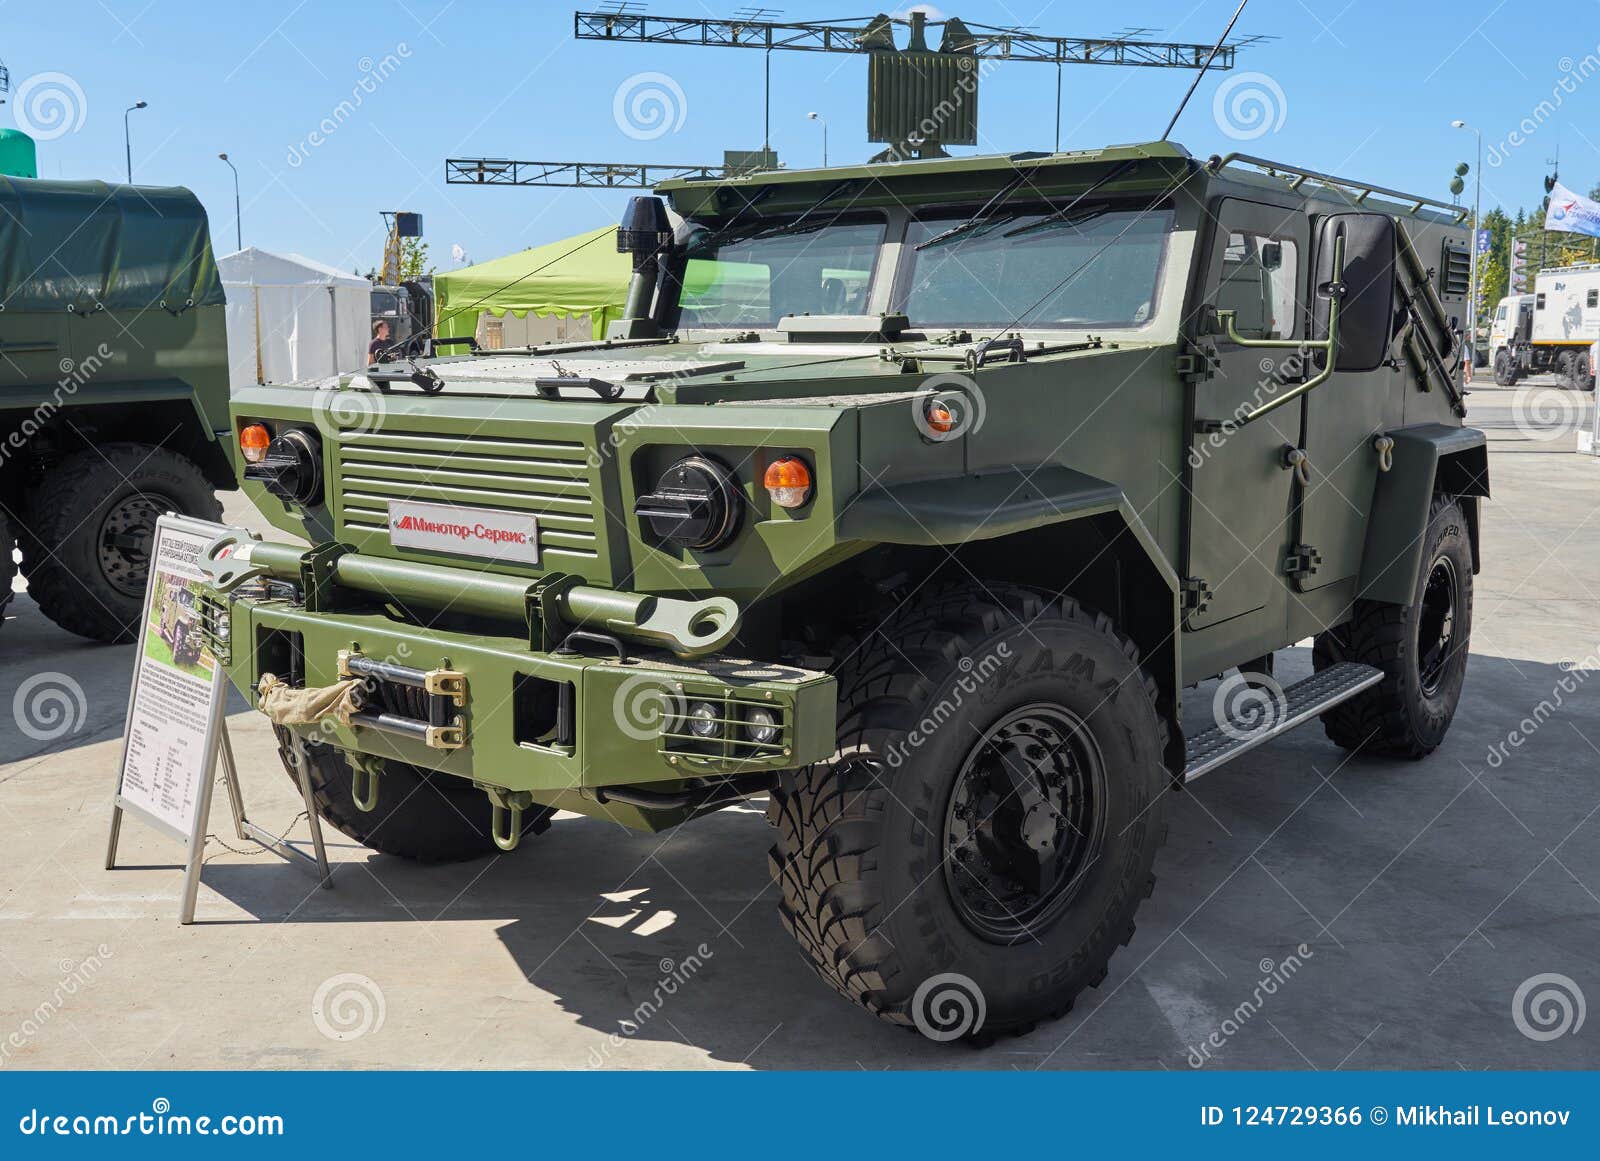 KUBINKA, RUSSIA, AUG.24, 2018: Special Military Multipurpose Off Road Truck  VITIM 668240 Editorial Photo - Image of military, armor: 124729366